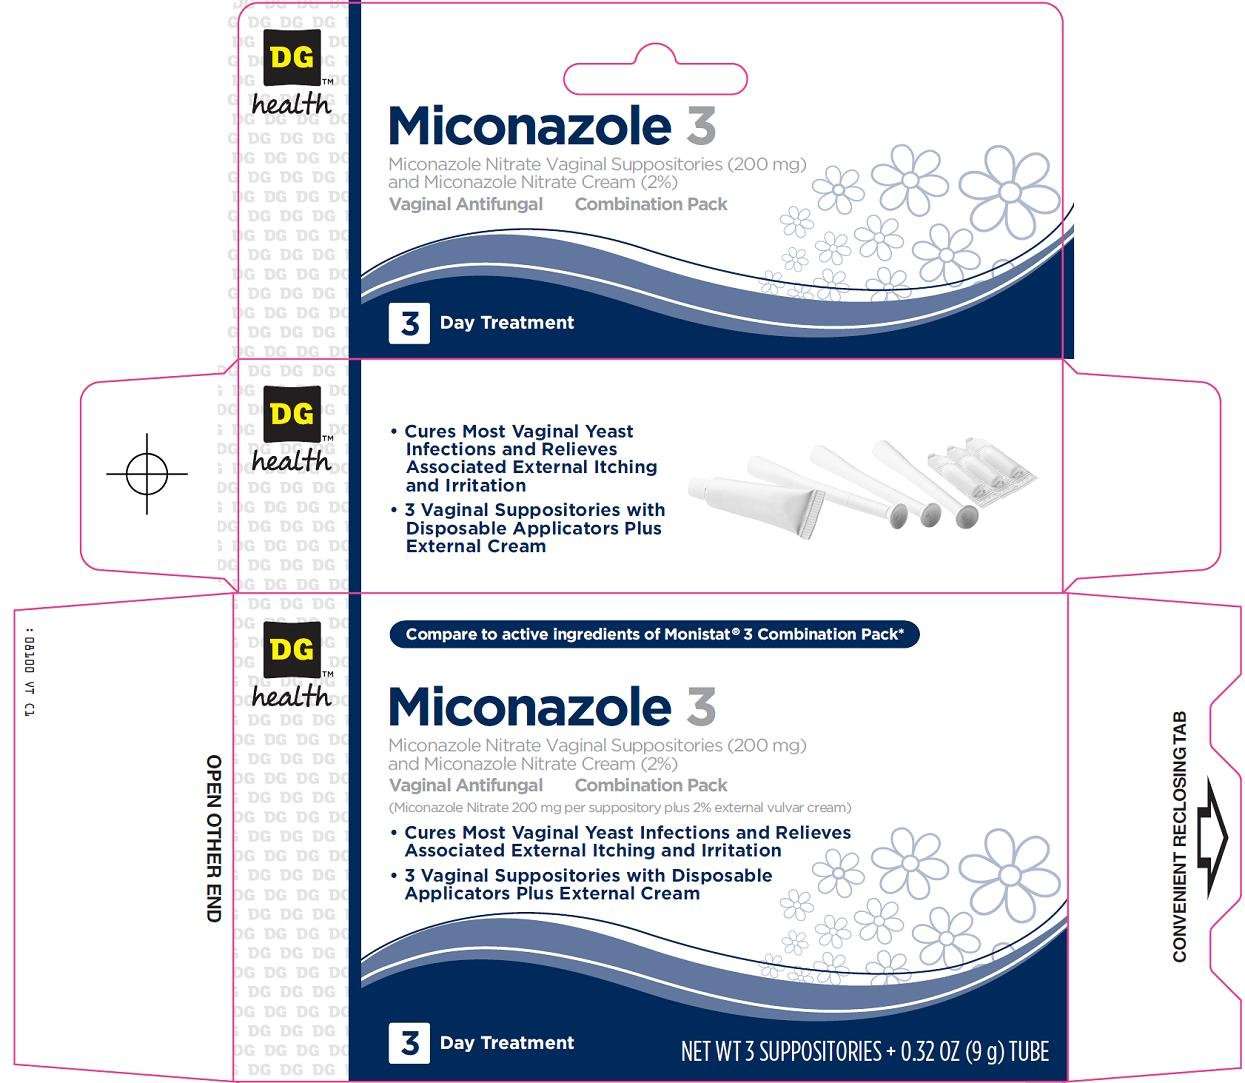 dg health miconazole 3